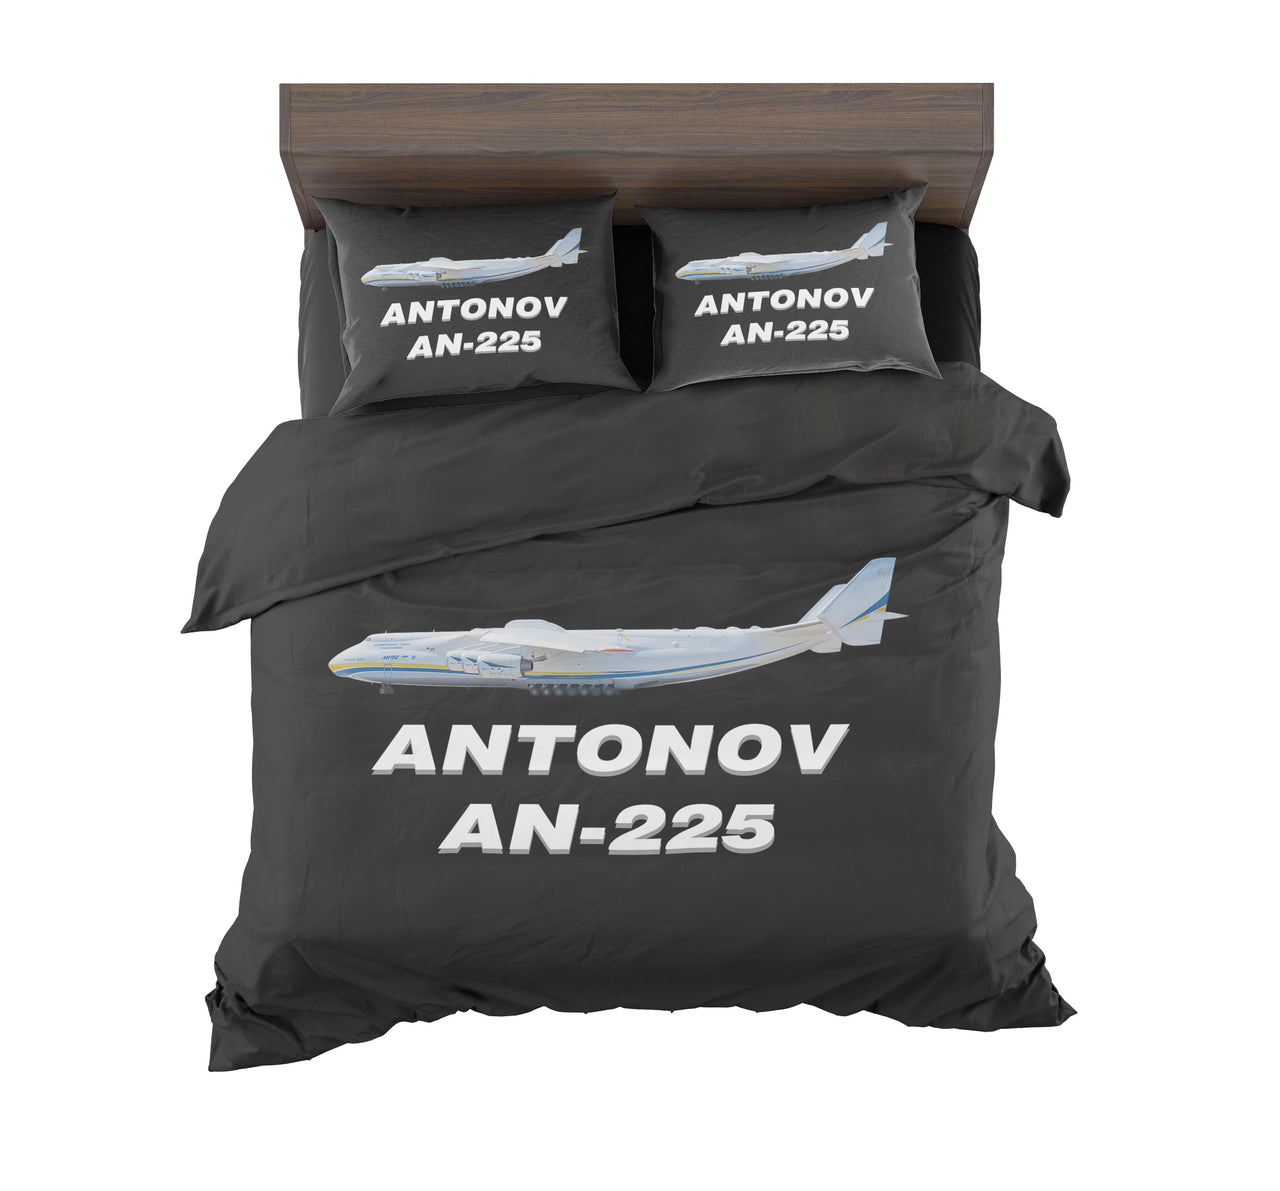 The Antonov AN-225 Designed Bedding Sets